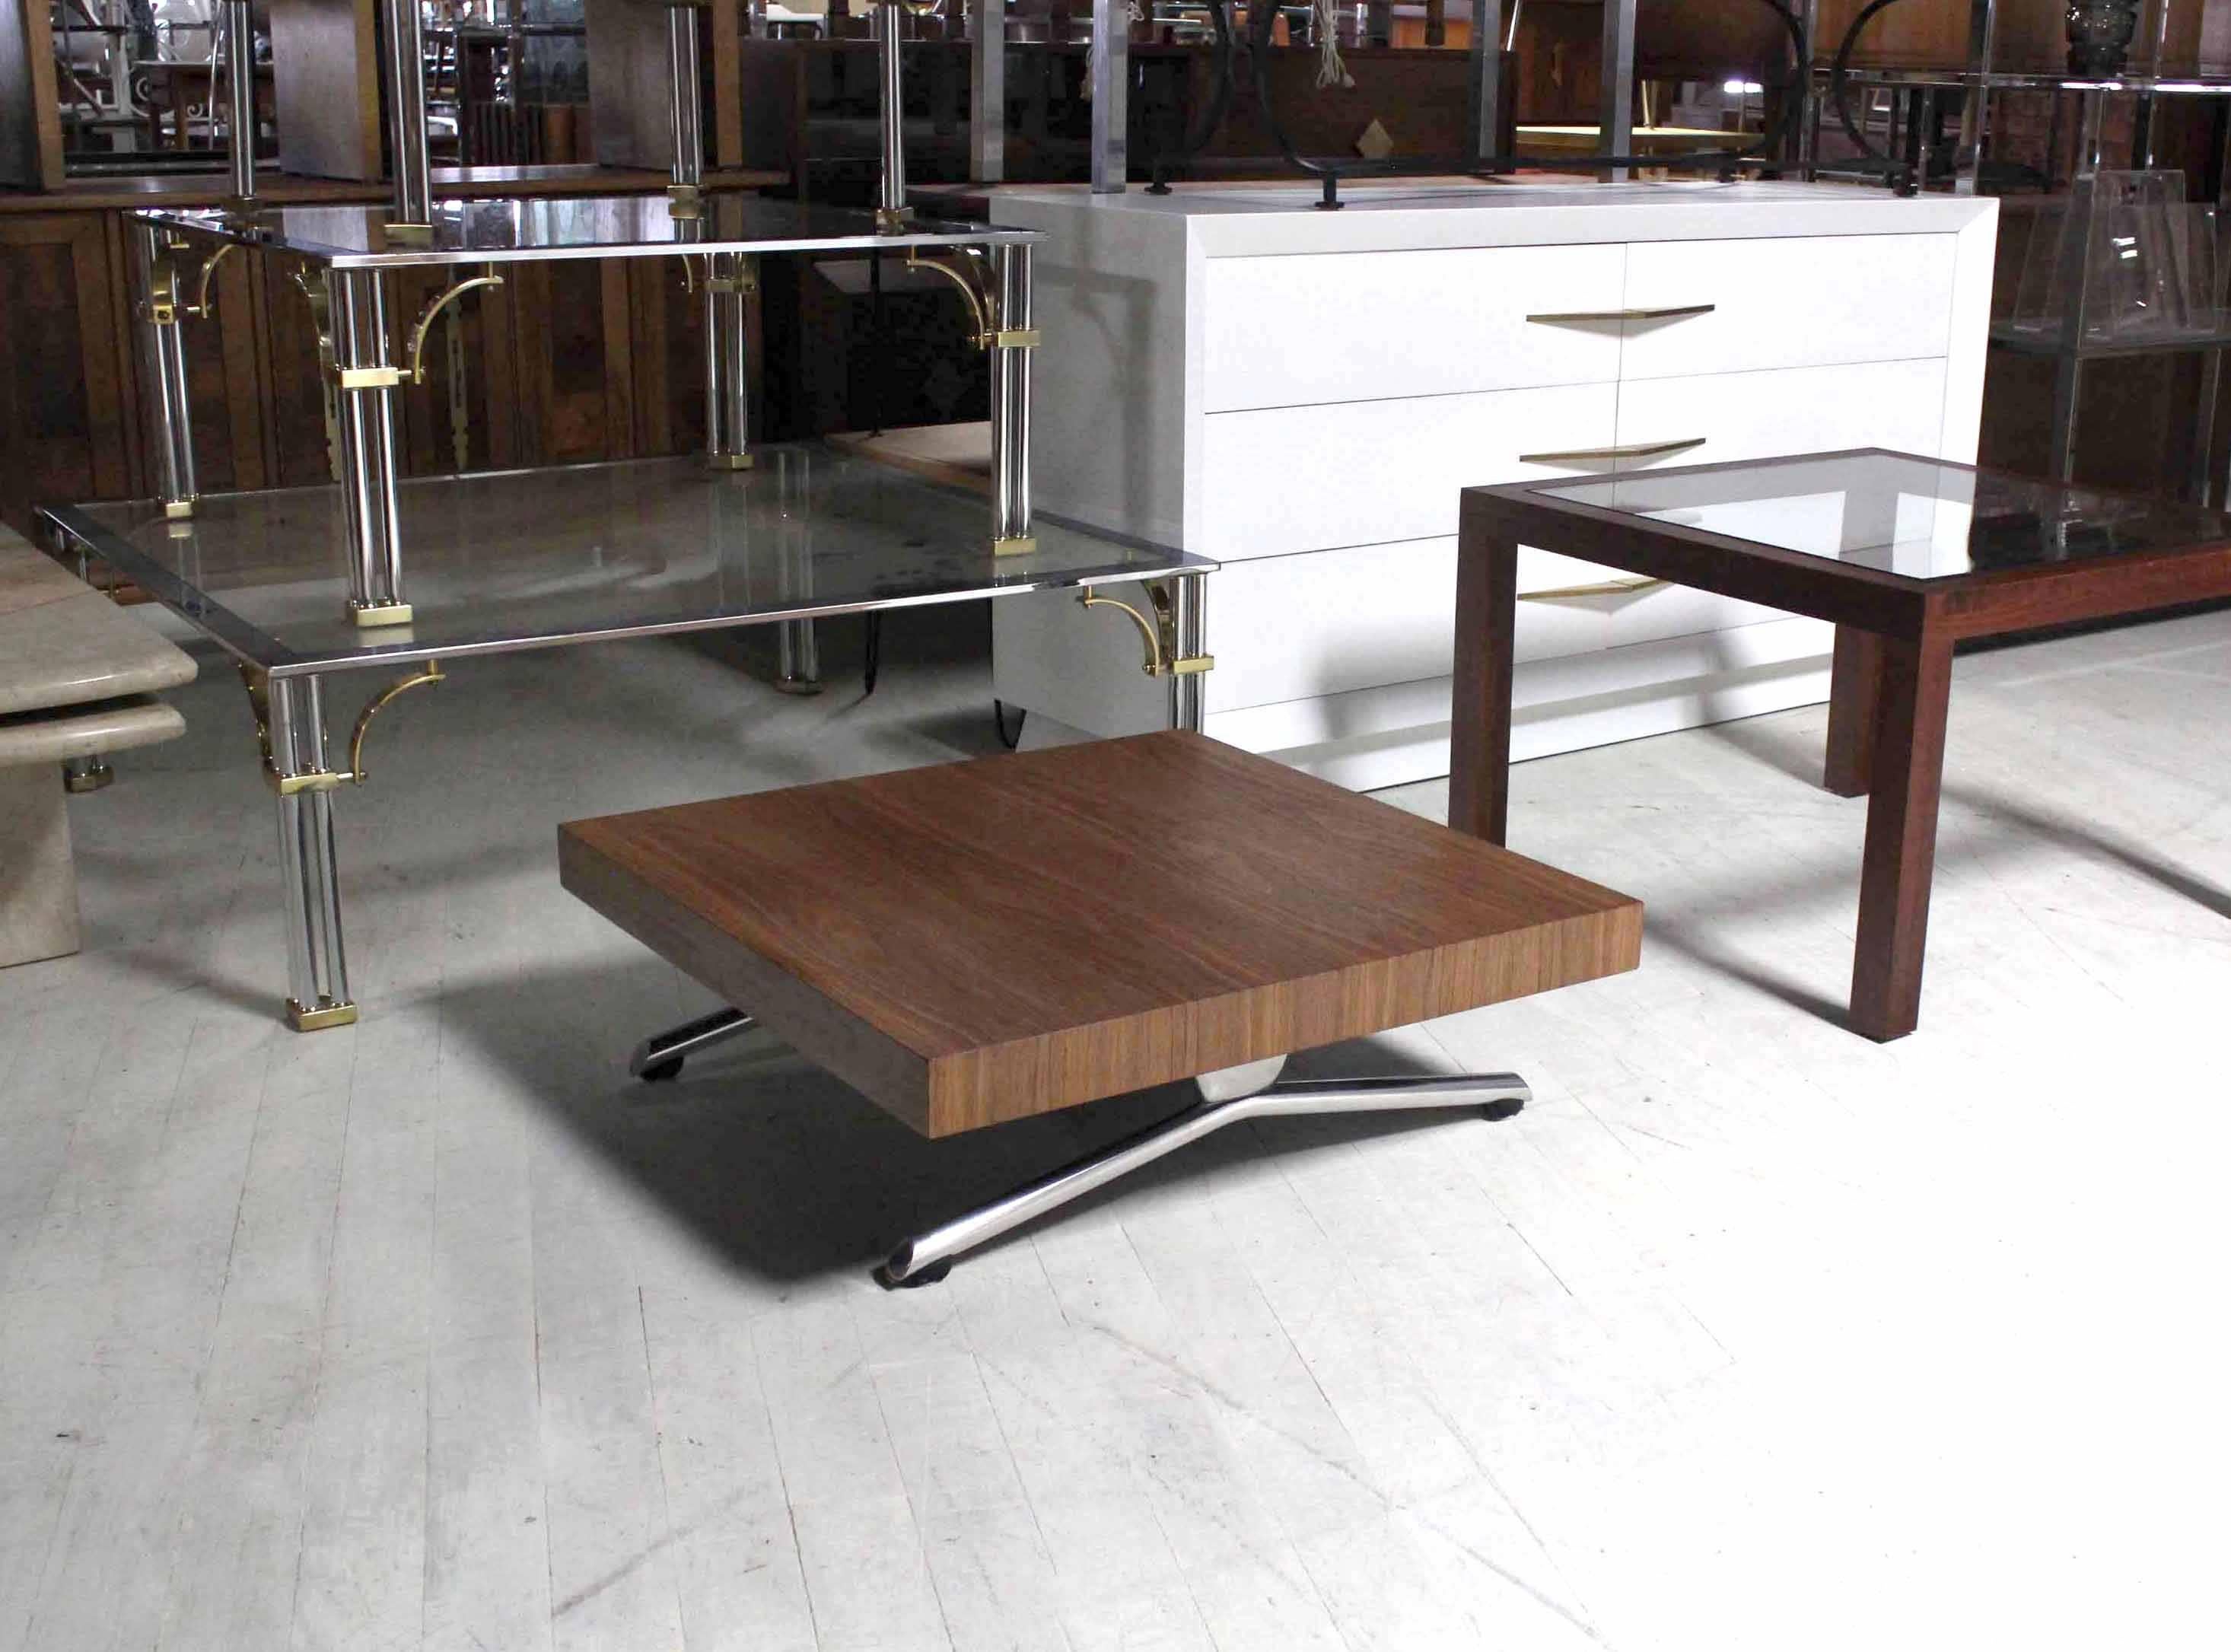 Unusual splay leg Mid Century Modern style walnut top square coffee table. Measures: 32 x 32".